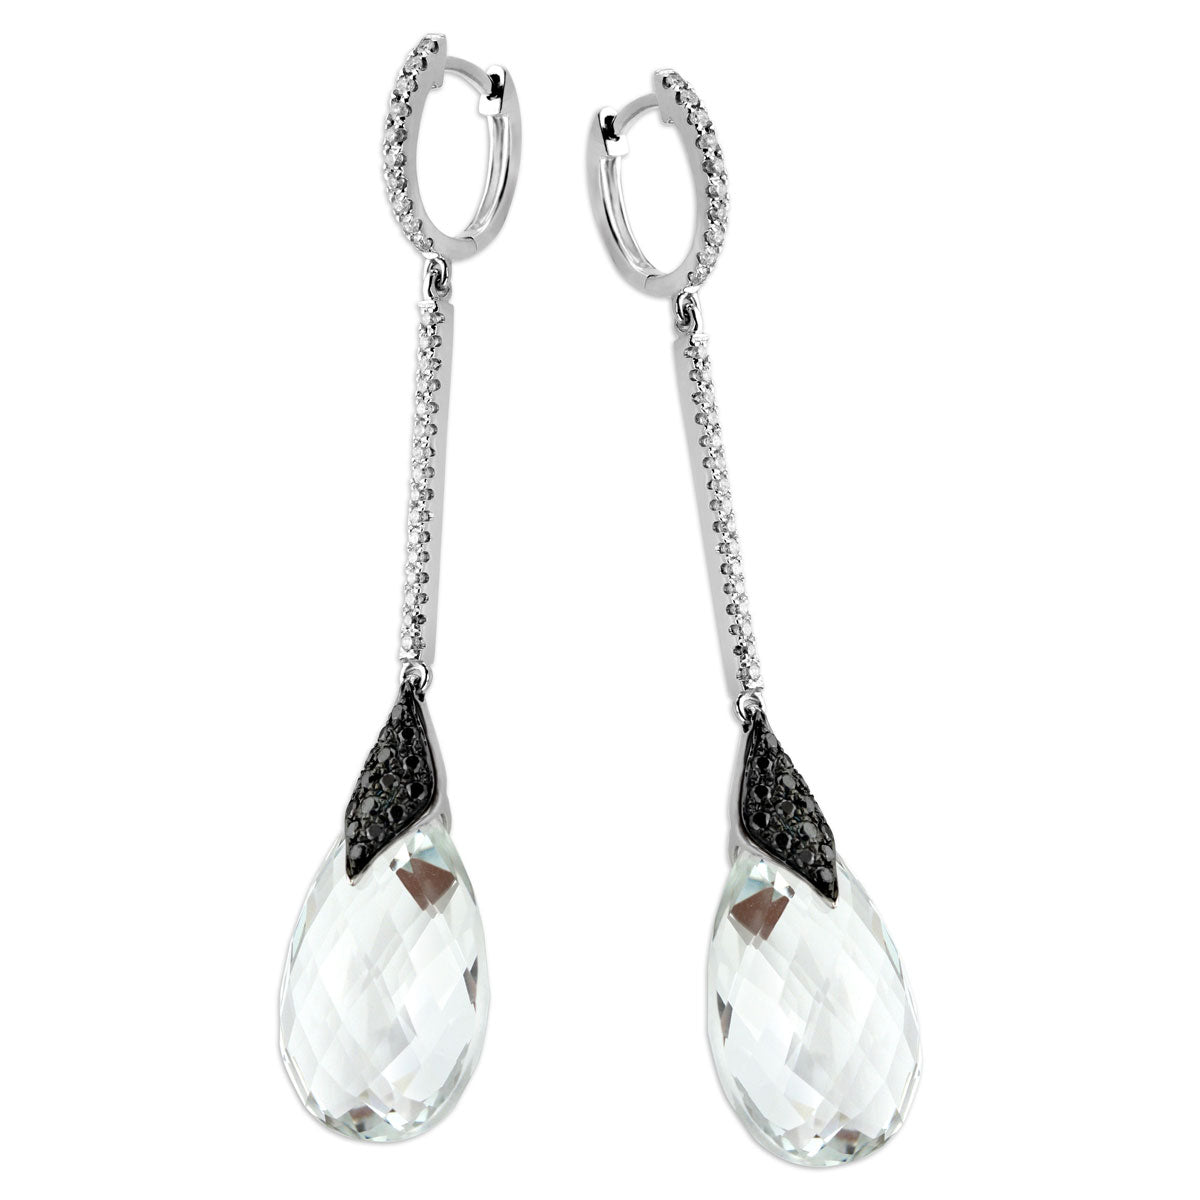 White and Black Diamond Earrings-339567